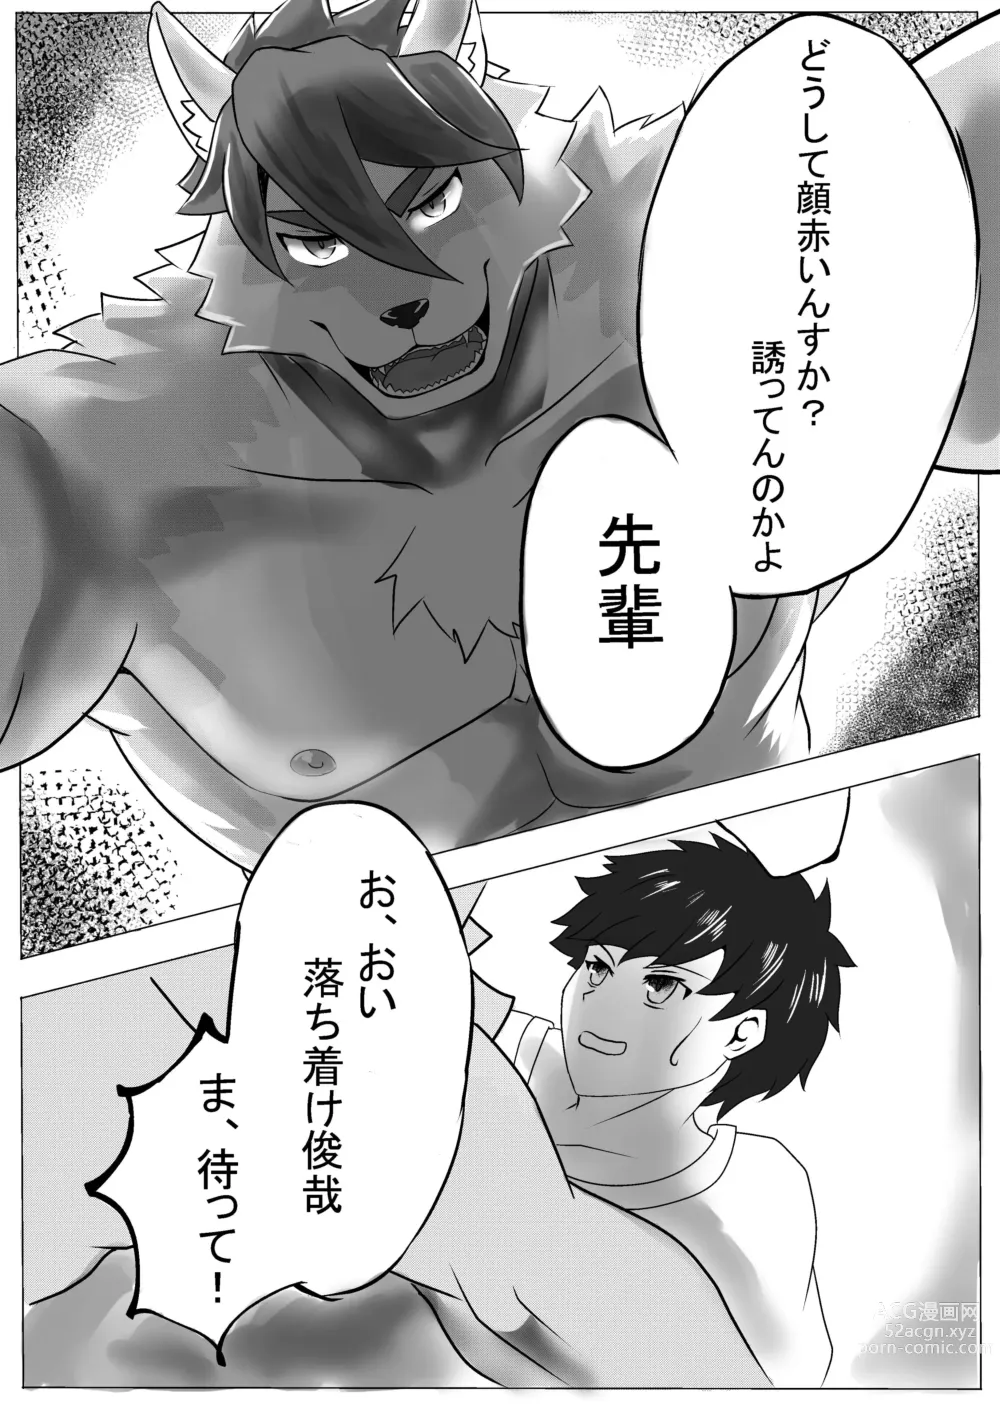 Page 8 of doujinshi Yoru no Ookami